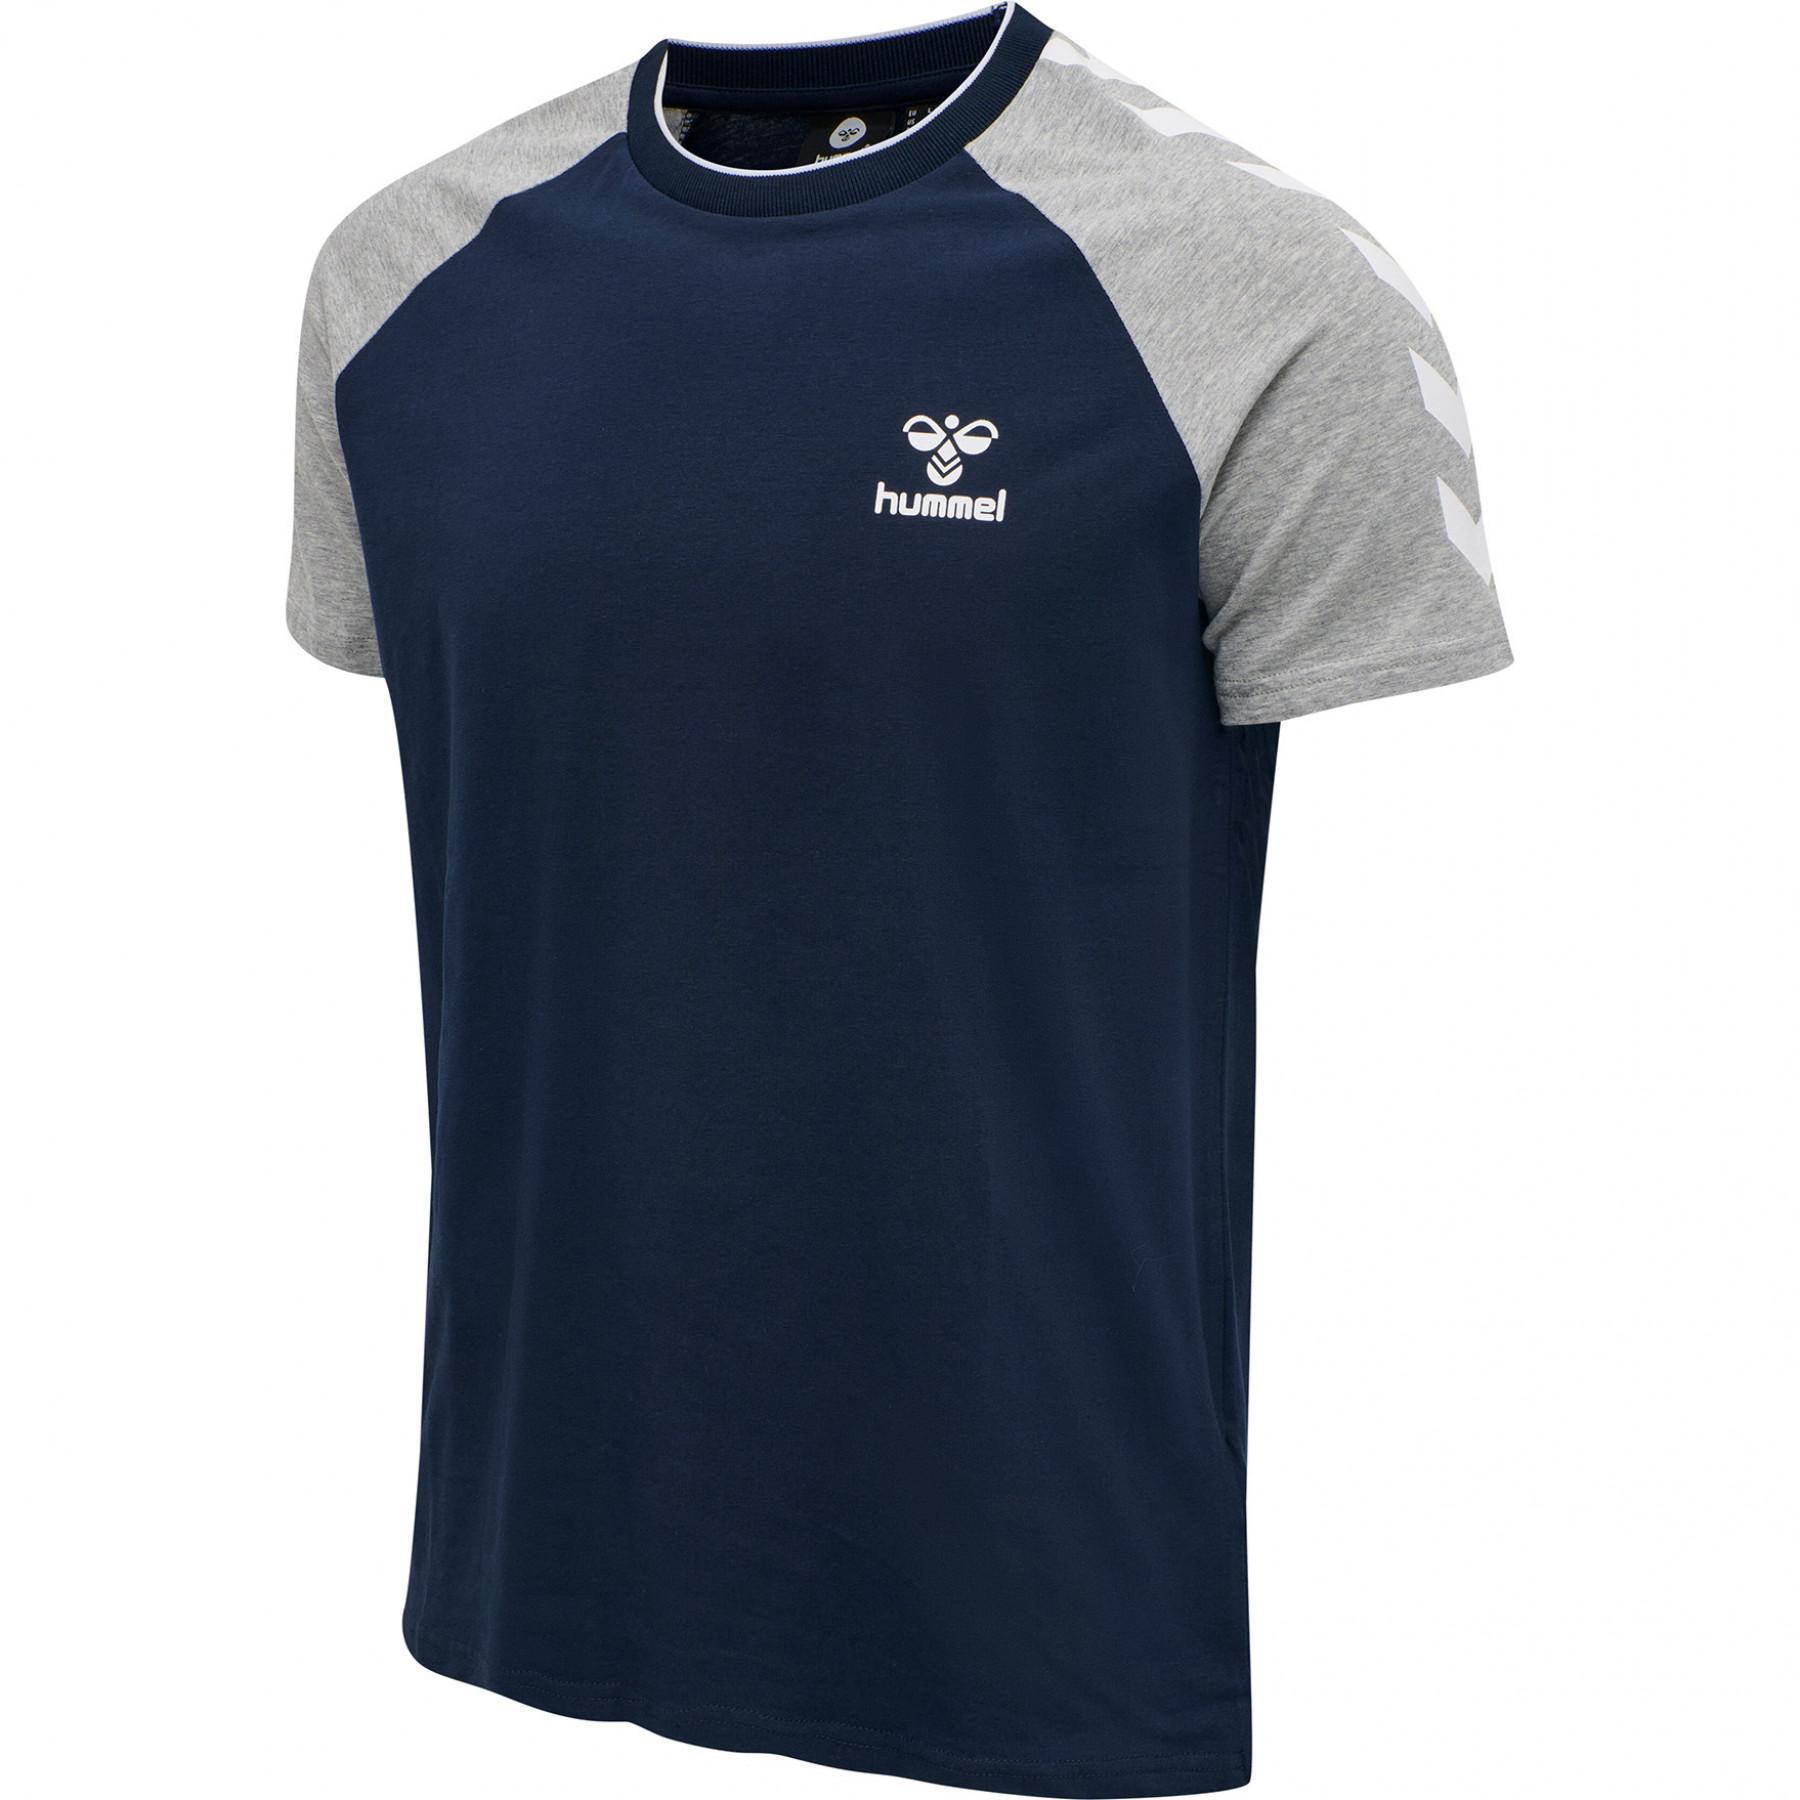 T-shirt - Hummel hmlmark T-shirts wear - - polos Handball Textile and